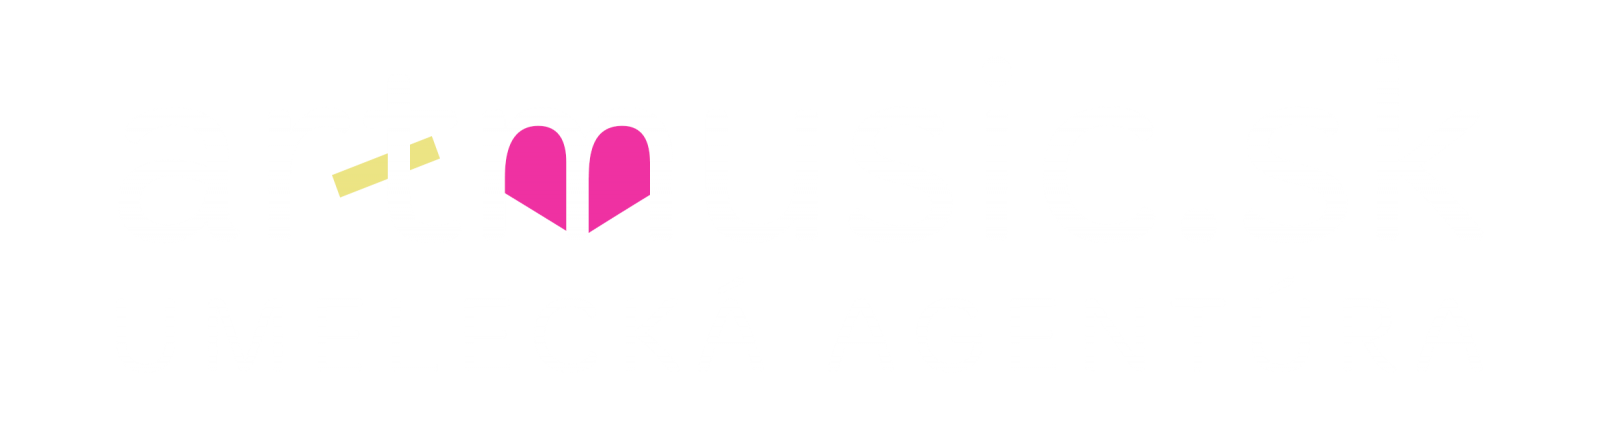 artmusic_logo_sk_agentura_4-1600x427.png